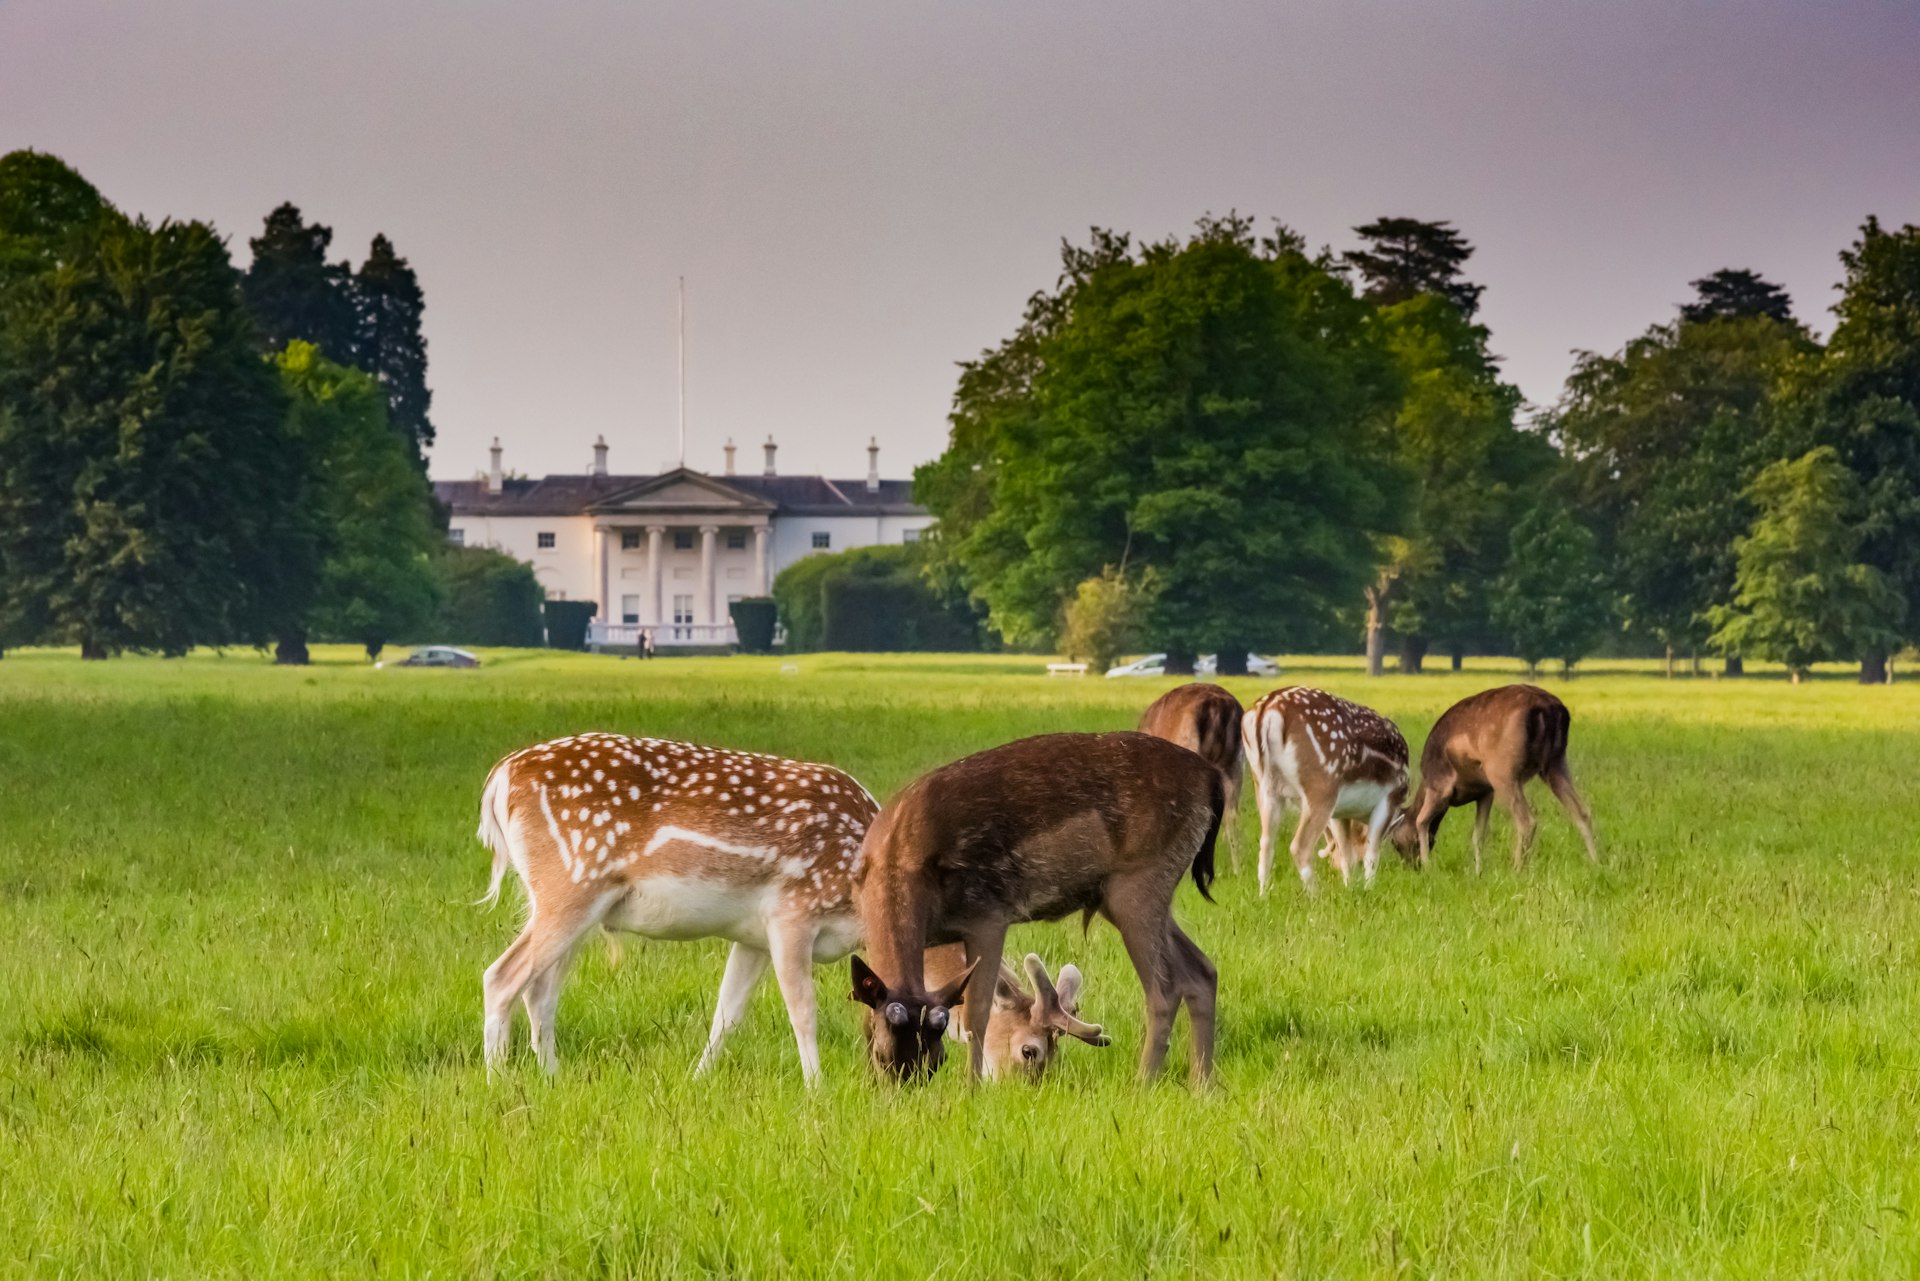 Wild deer grazing in the Phoenix Park in front of the President of Ireland’s home, Áras an Uachtaráin, Dublin, Ireland